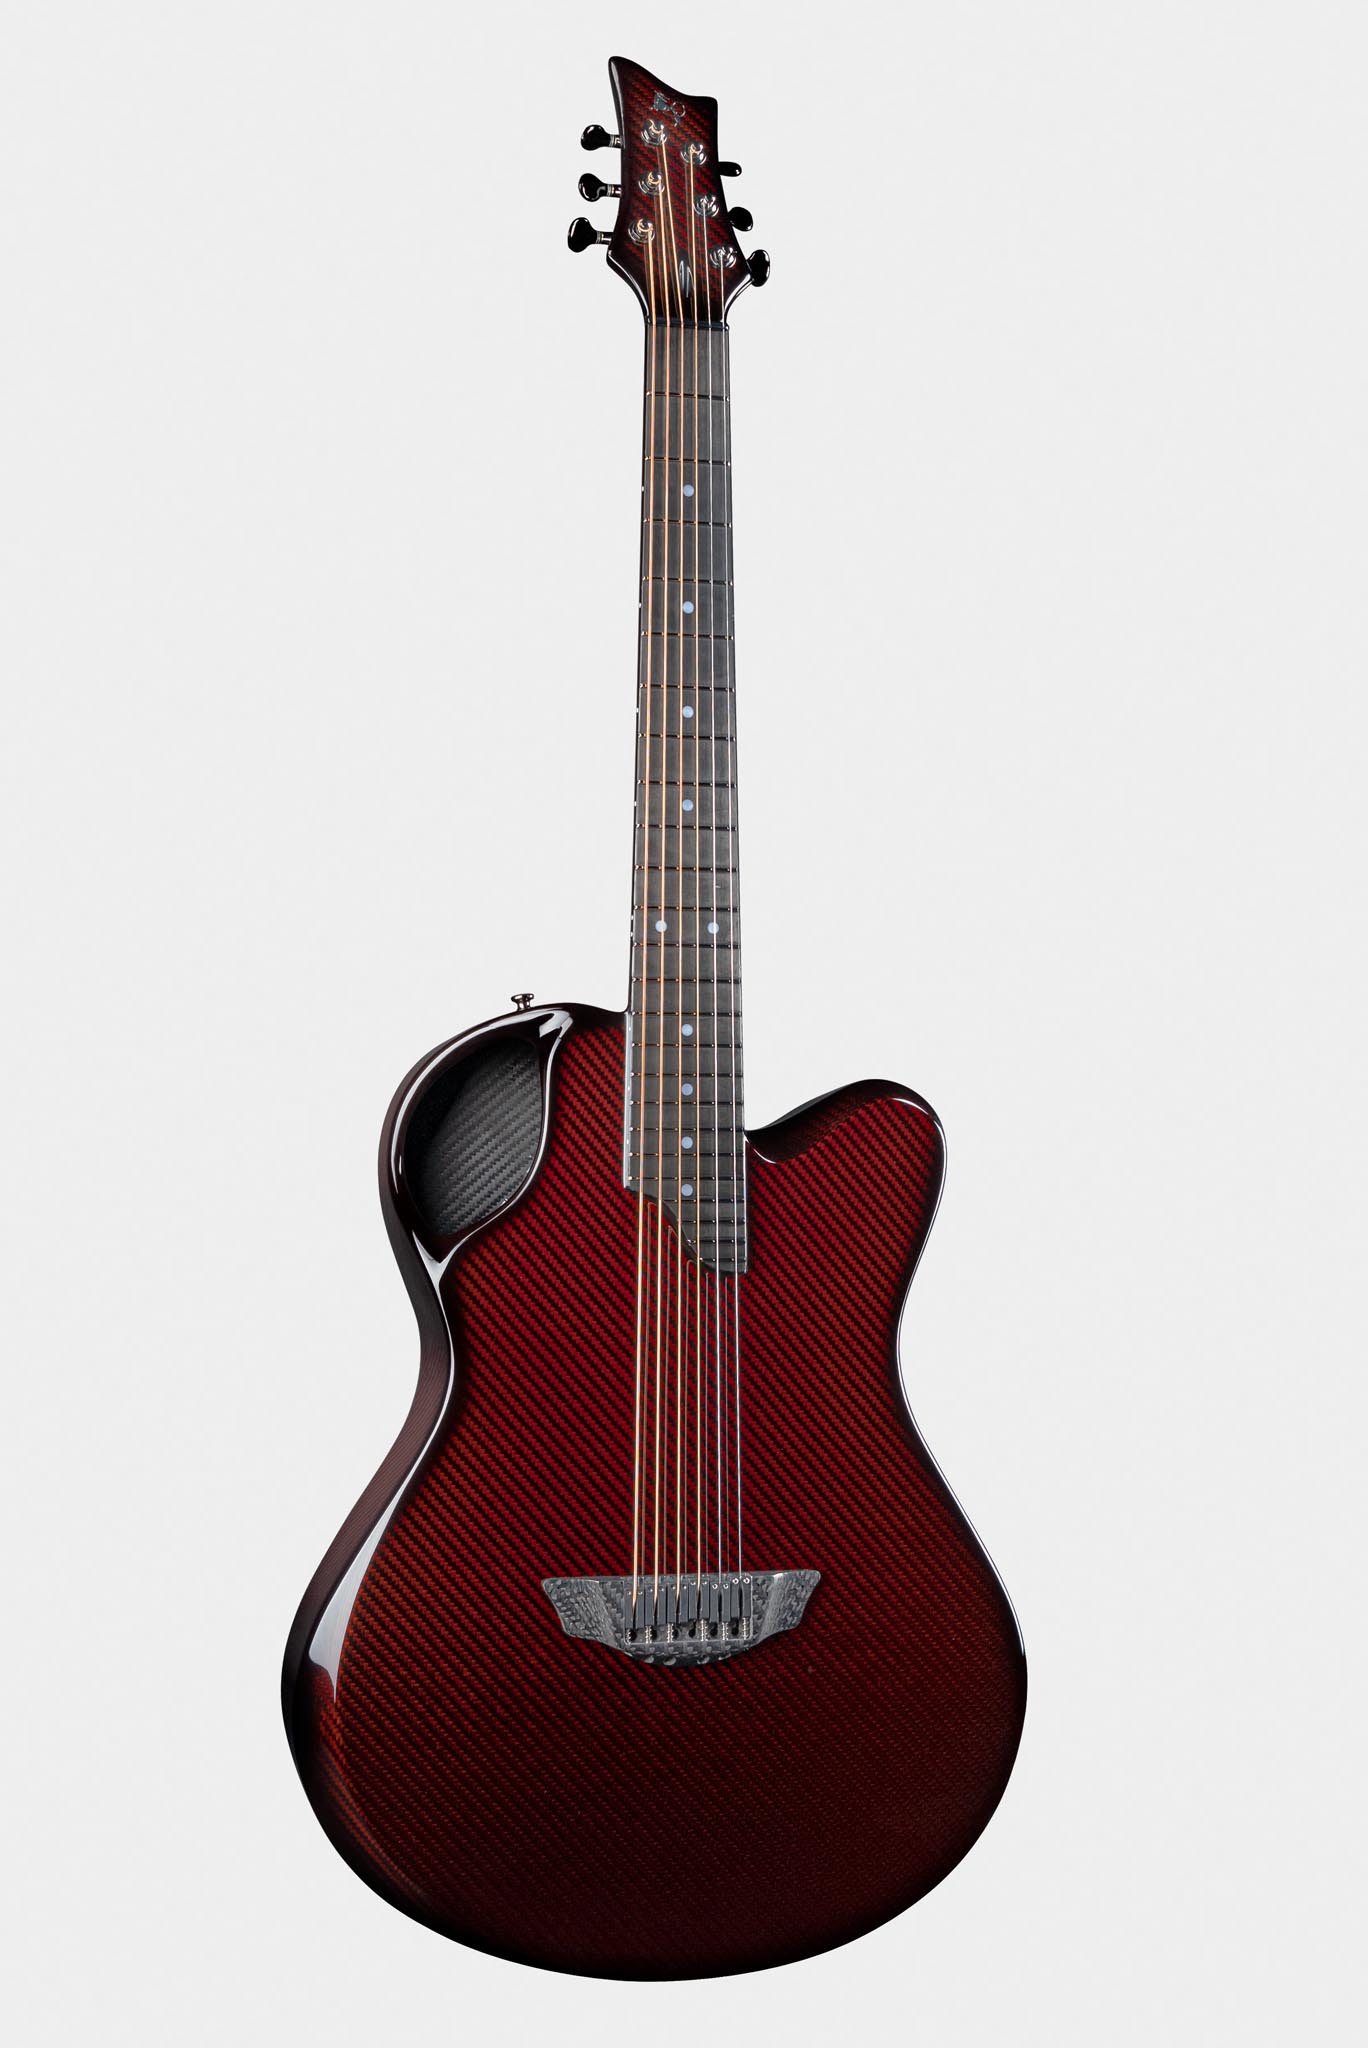 Emerald X20 Carbon Fiber Guitar in Red Finish